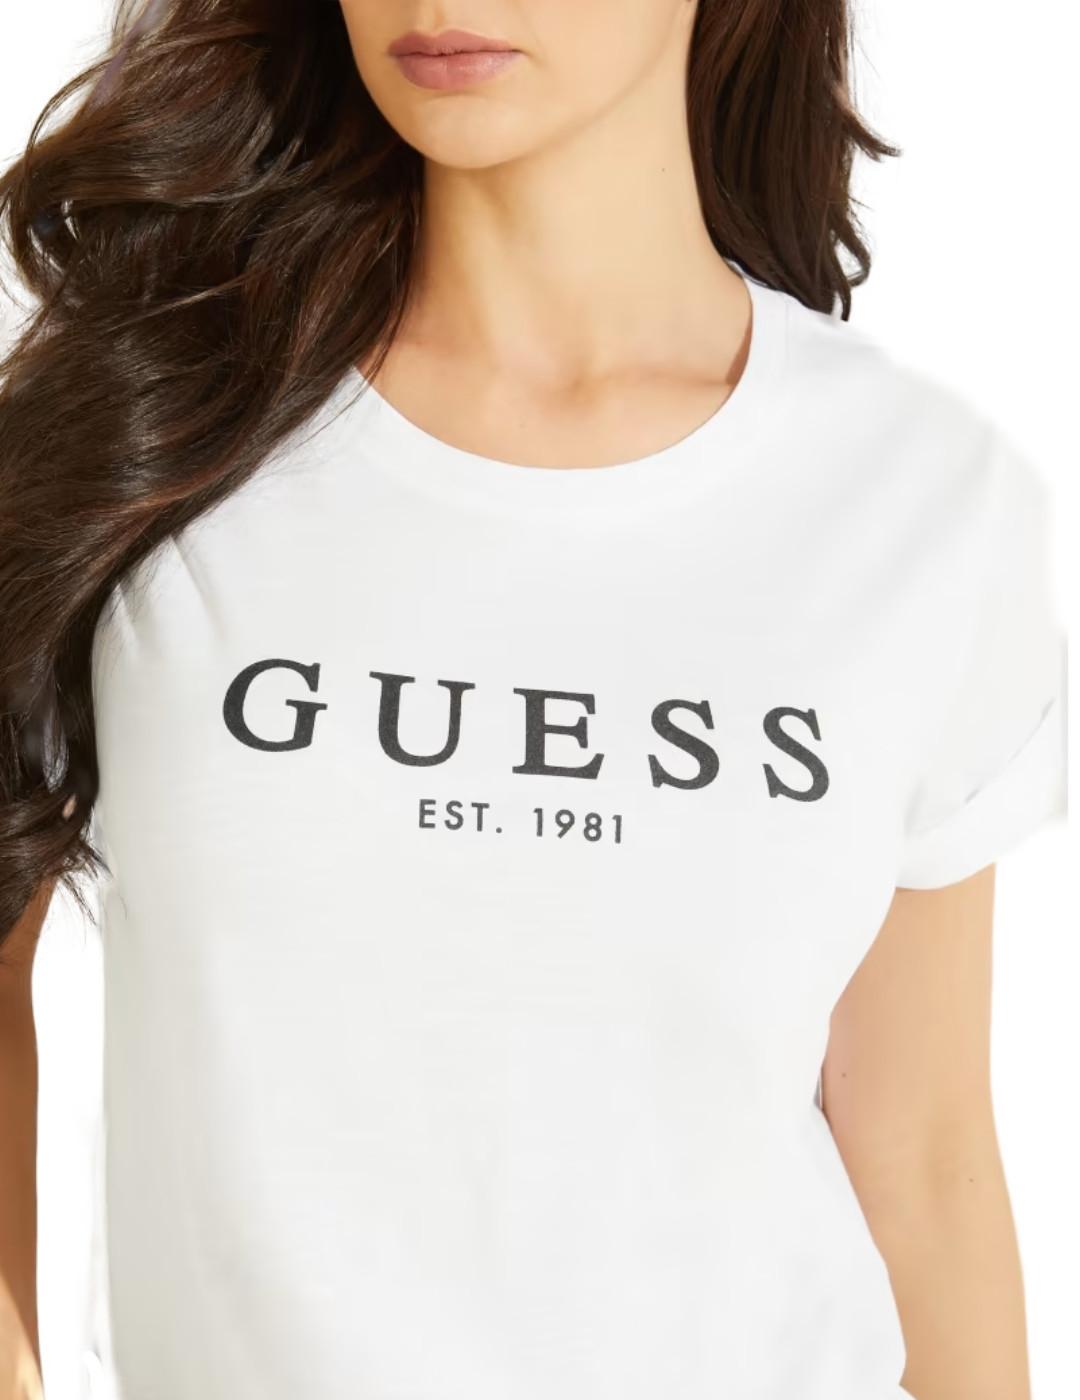 Camiseta Guess 1981 blanca de manga corta para mujer